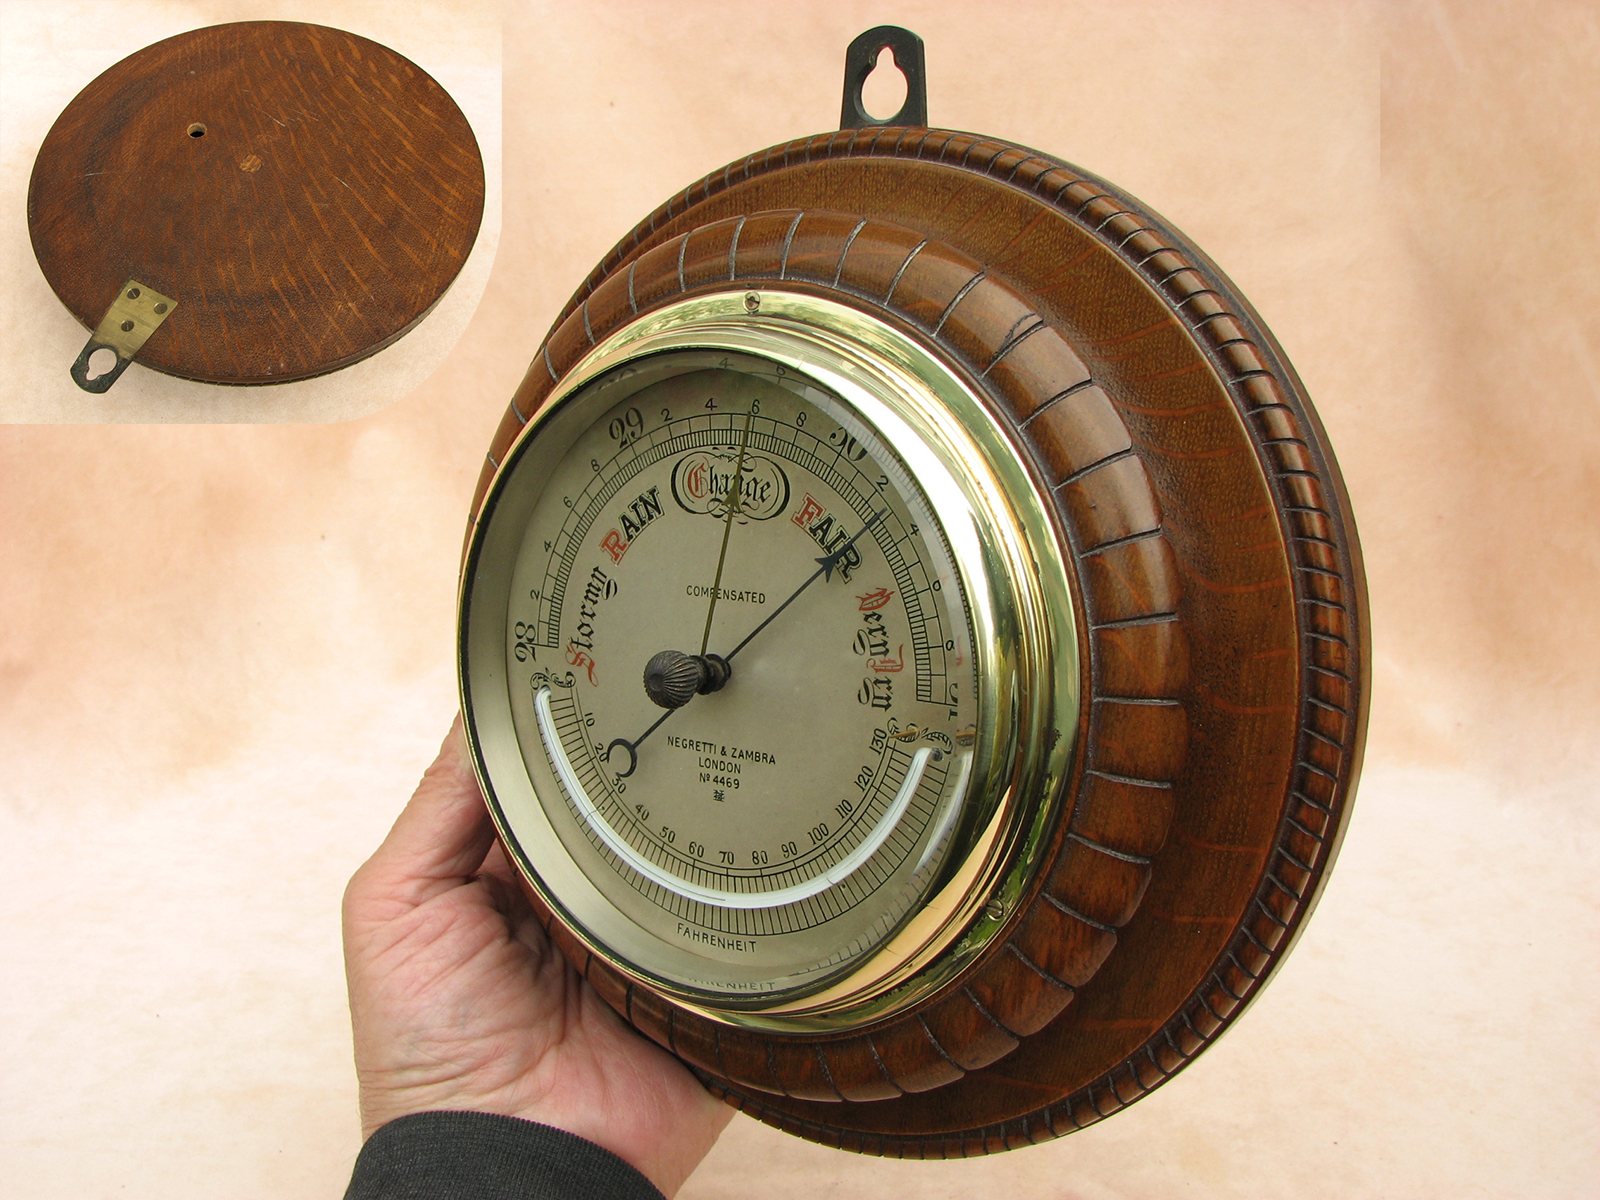 Antique barometer & thermometer by Negretti & Zambra London